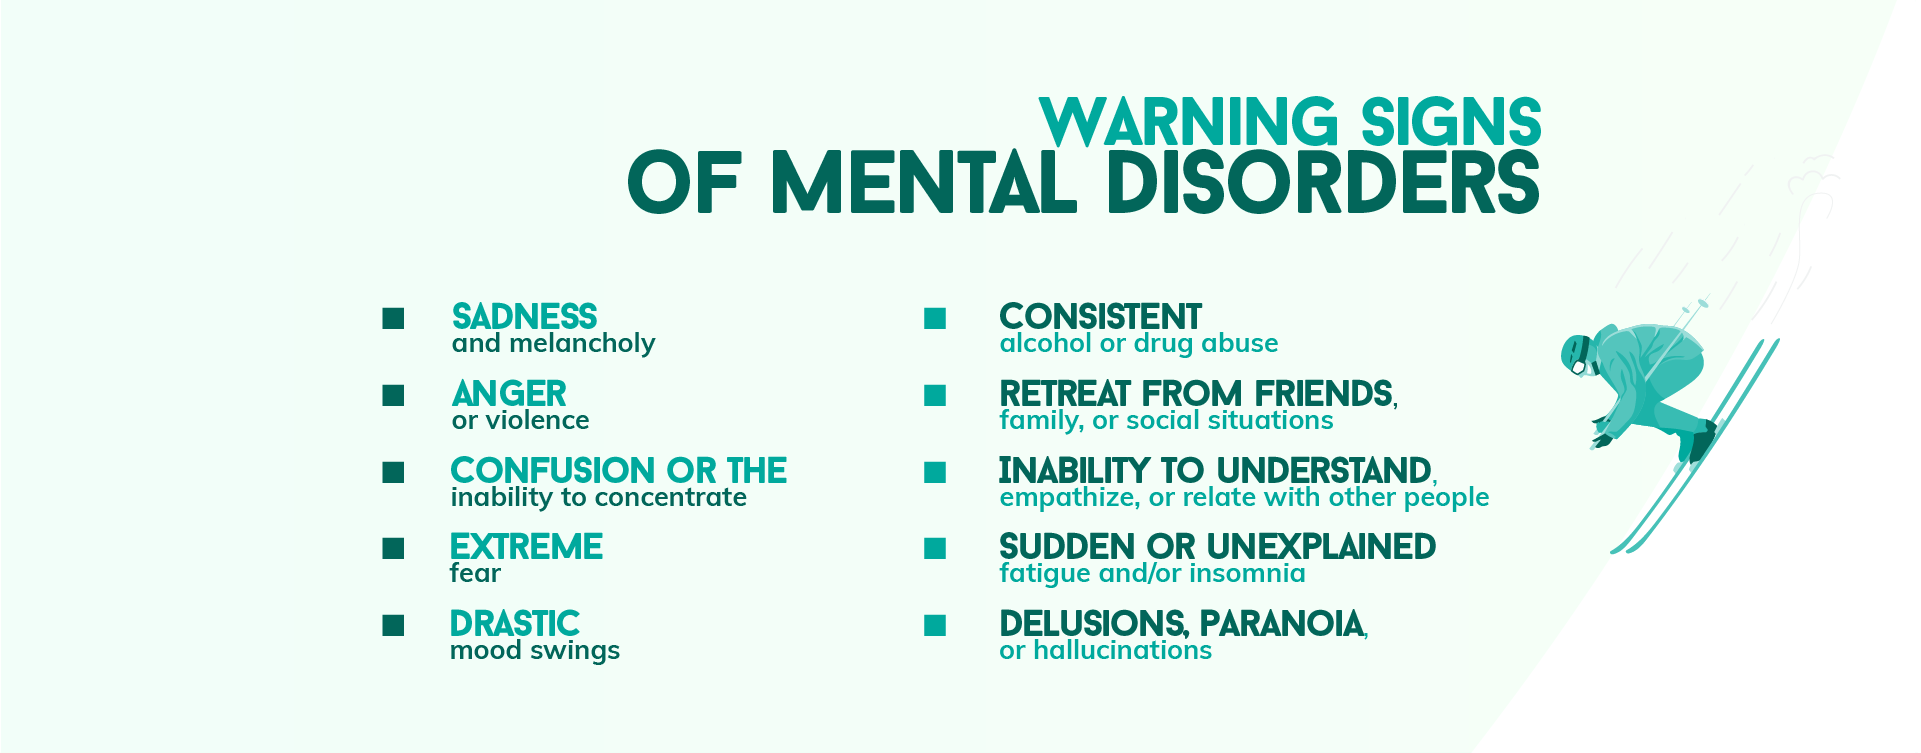 Dual diagnosis. DSM 5 Mental Disorder. Adjustment Disorder. Less likely